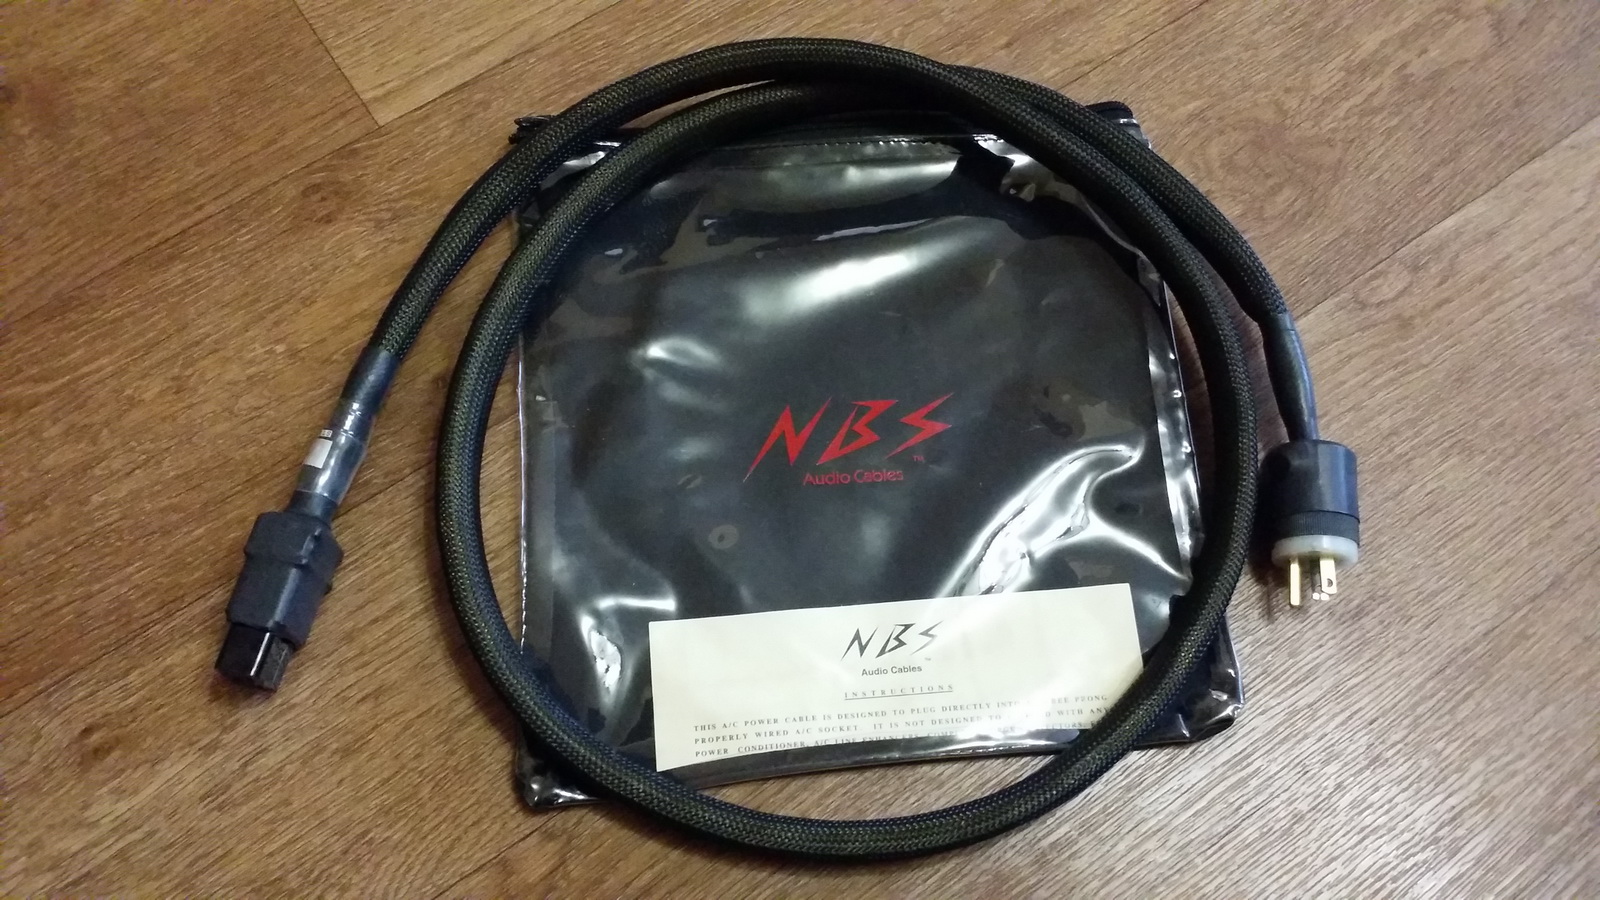 G 9.8 м с. NBS Omega extreme Power Cable. NBS 20wuu. 1.8 Метр провод. MV-nbs8006.